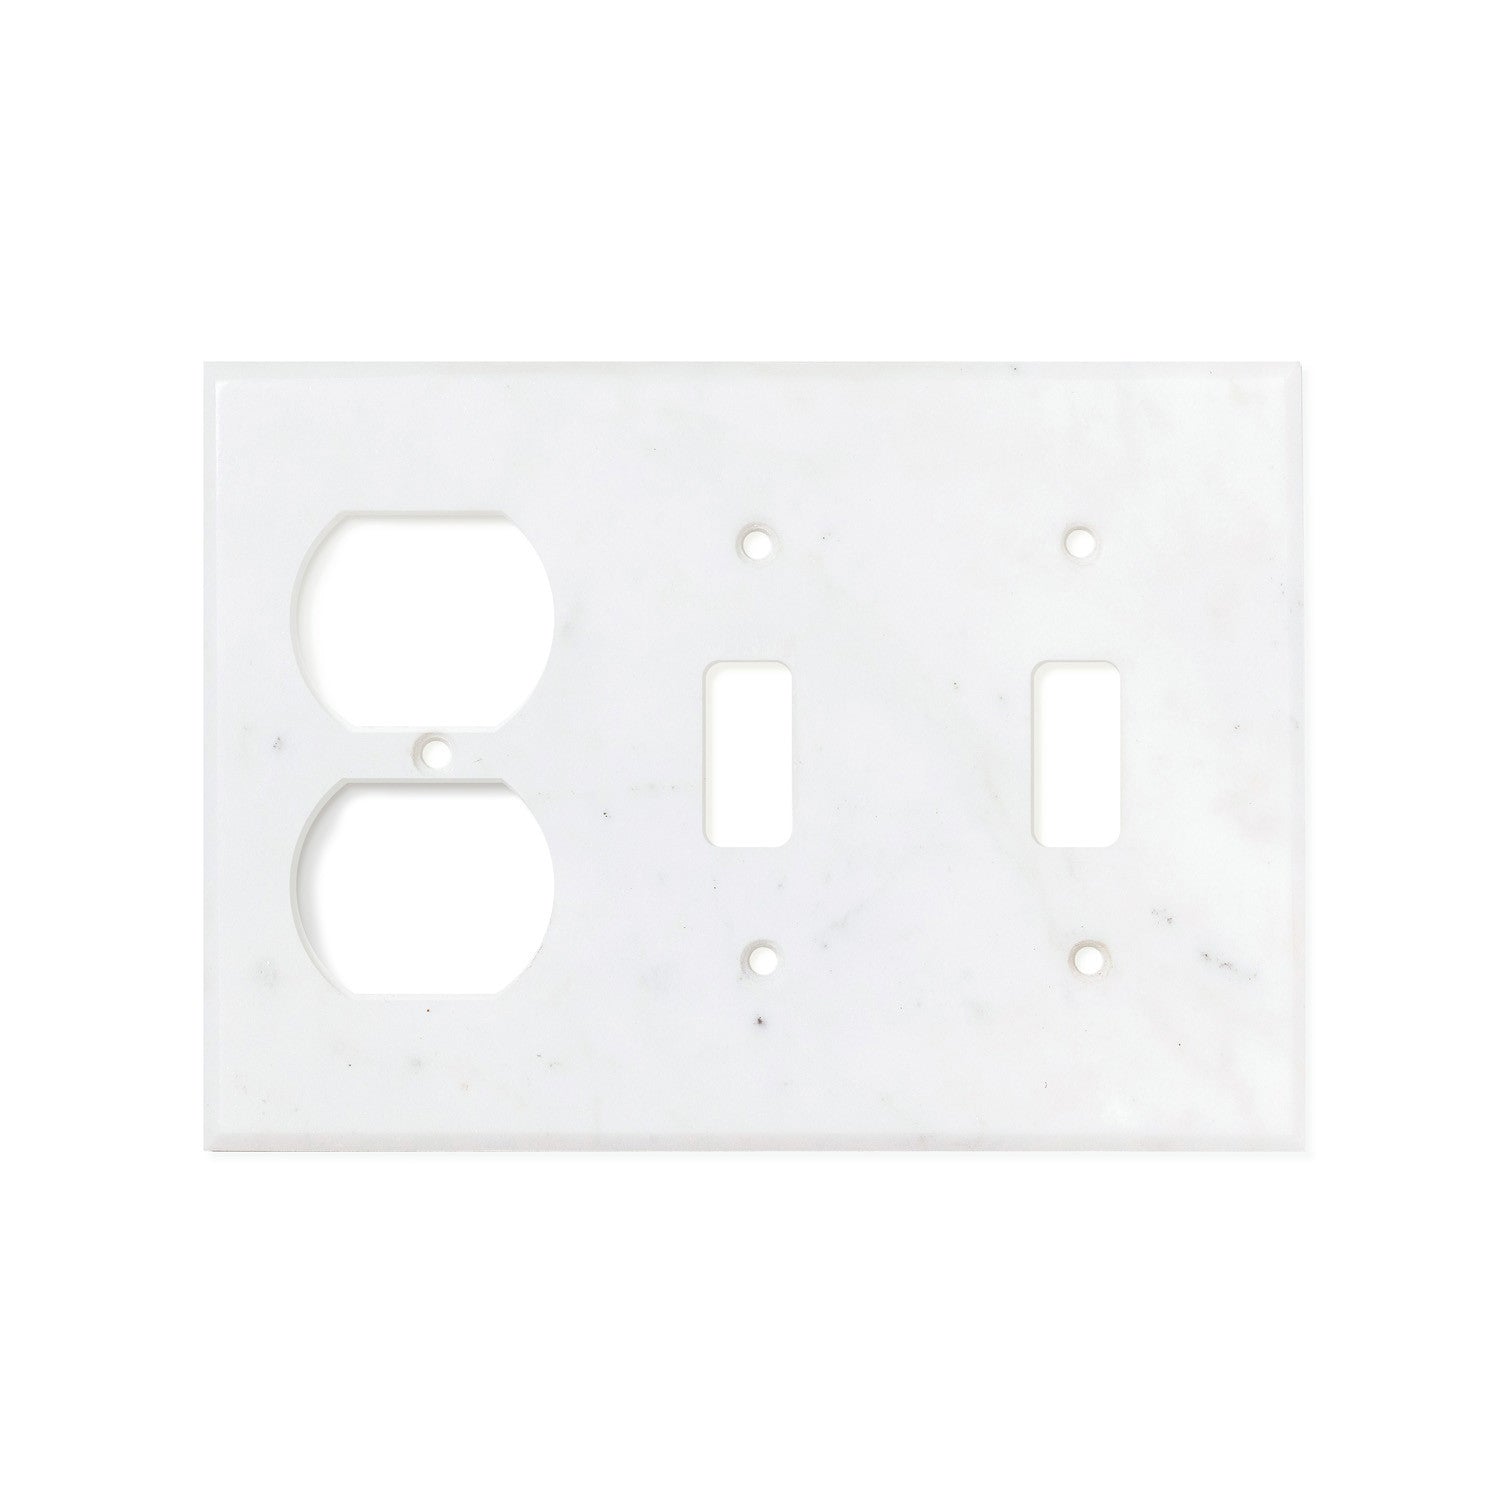 Bianco Carrara (Carrara White) Marble Switch Plate Cover, Polished (DOUBLE TOGGLE DUPLEX) - Tilephile